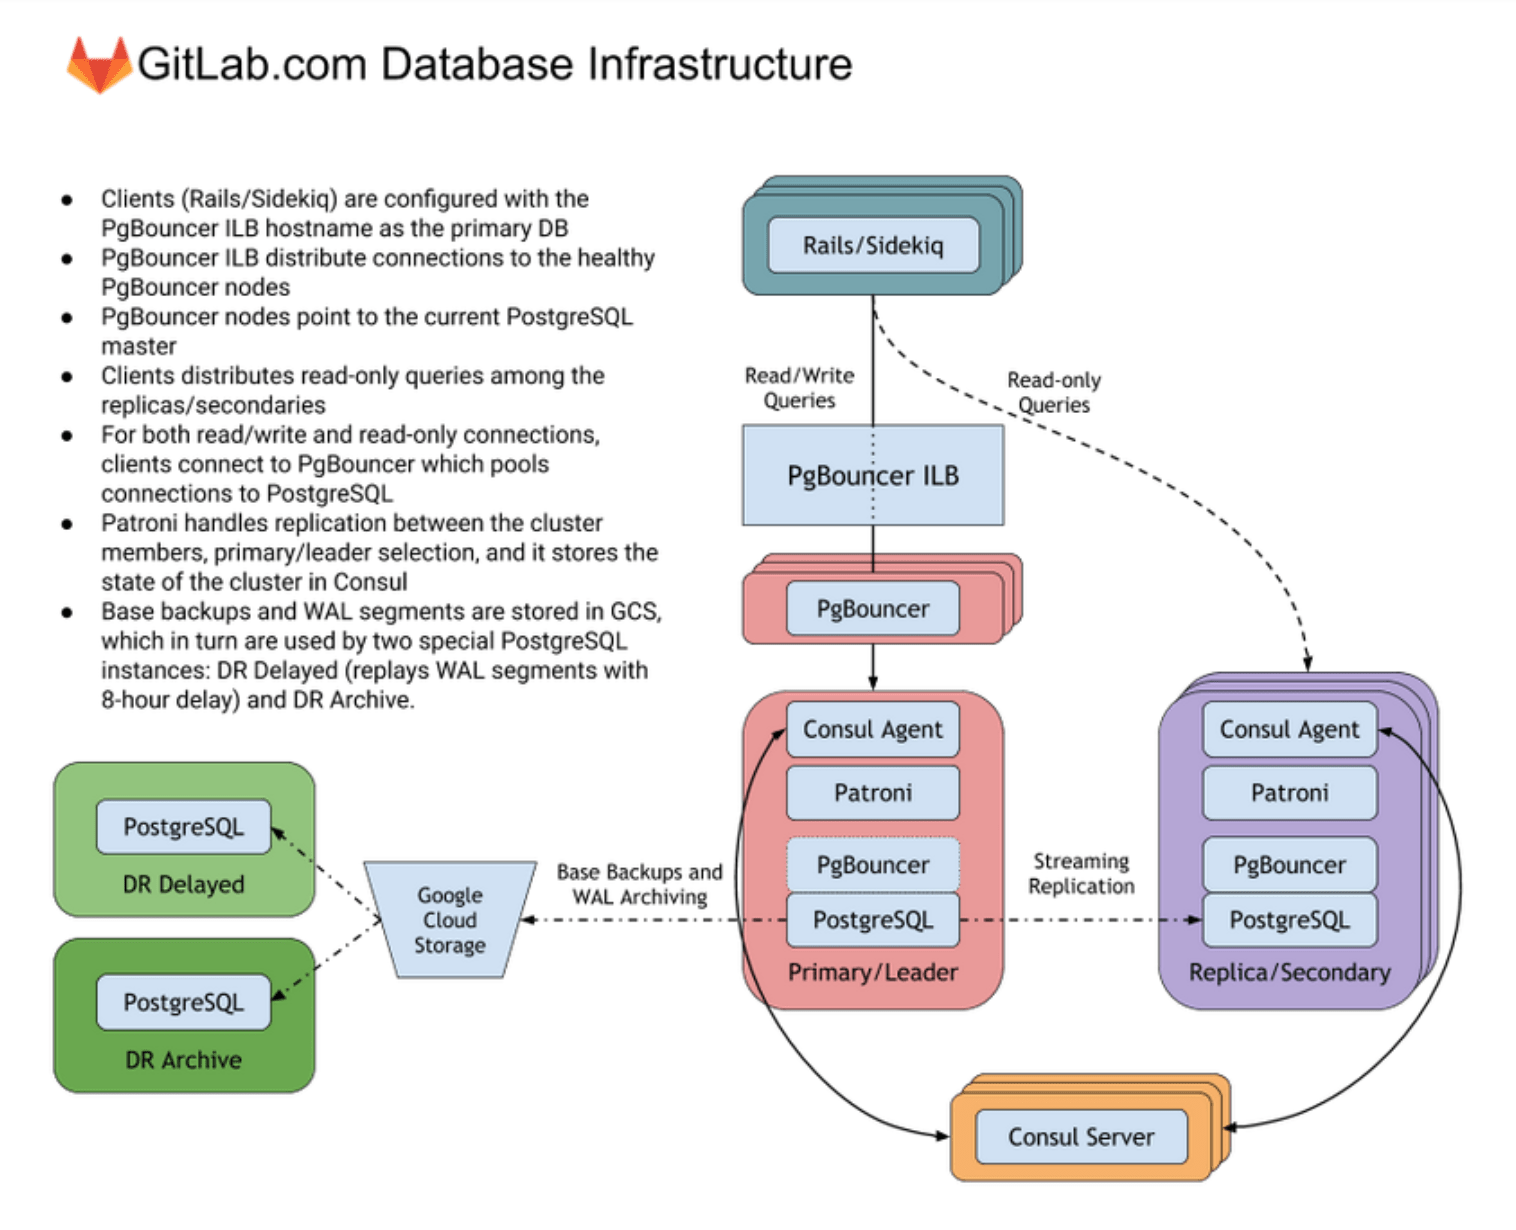 GitLab.com Architecture{: .note.text-center}